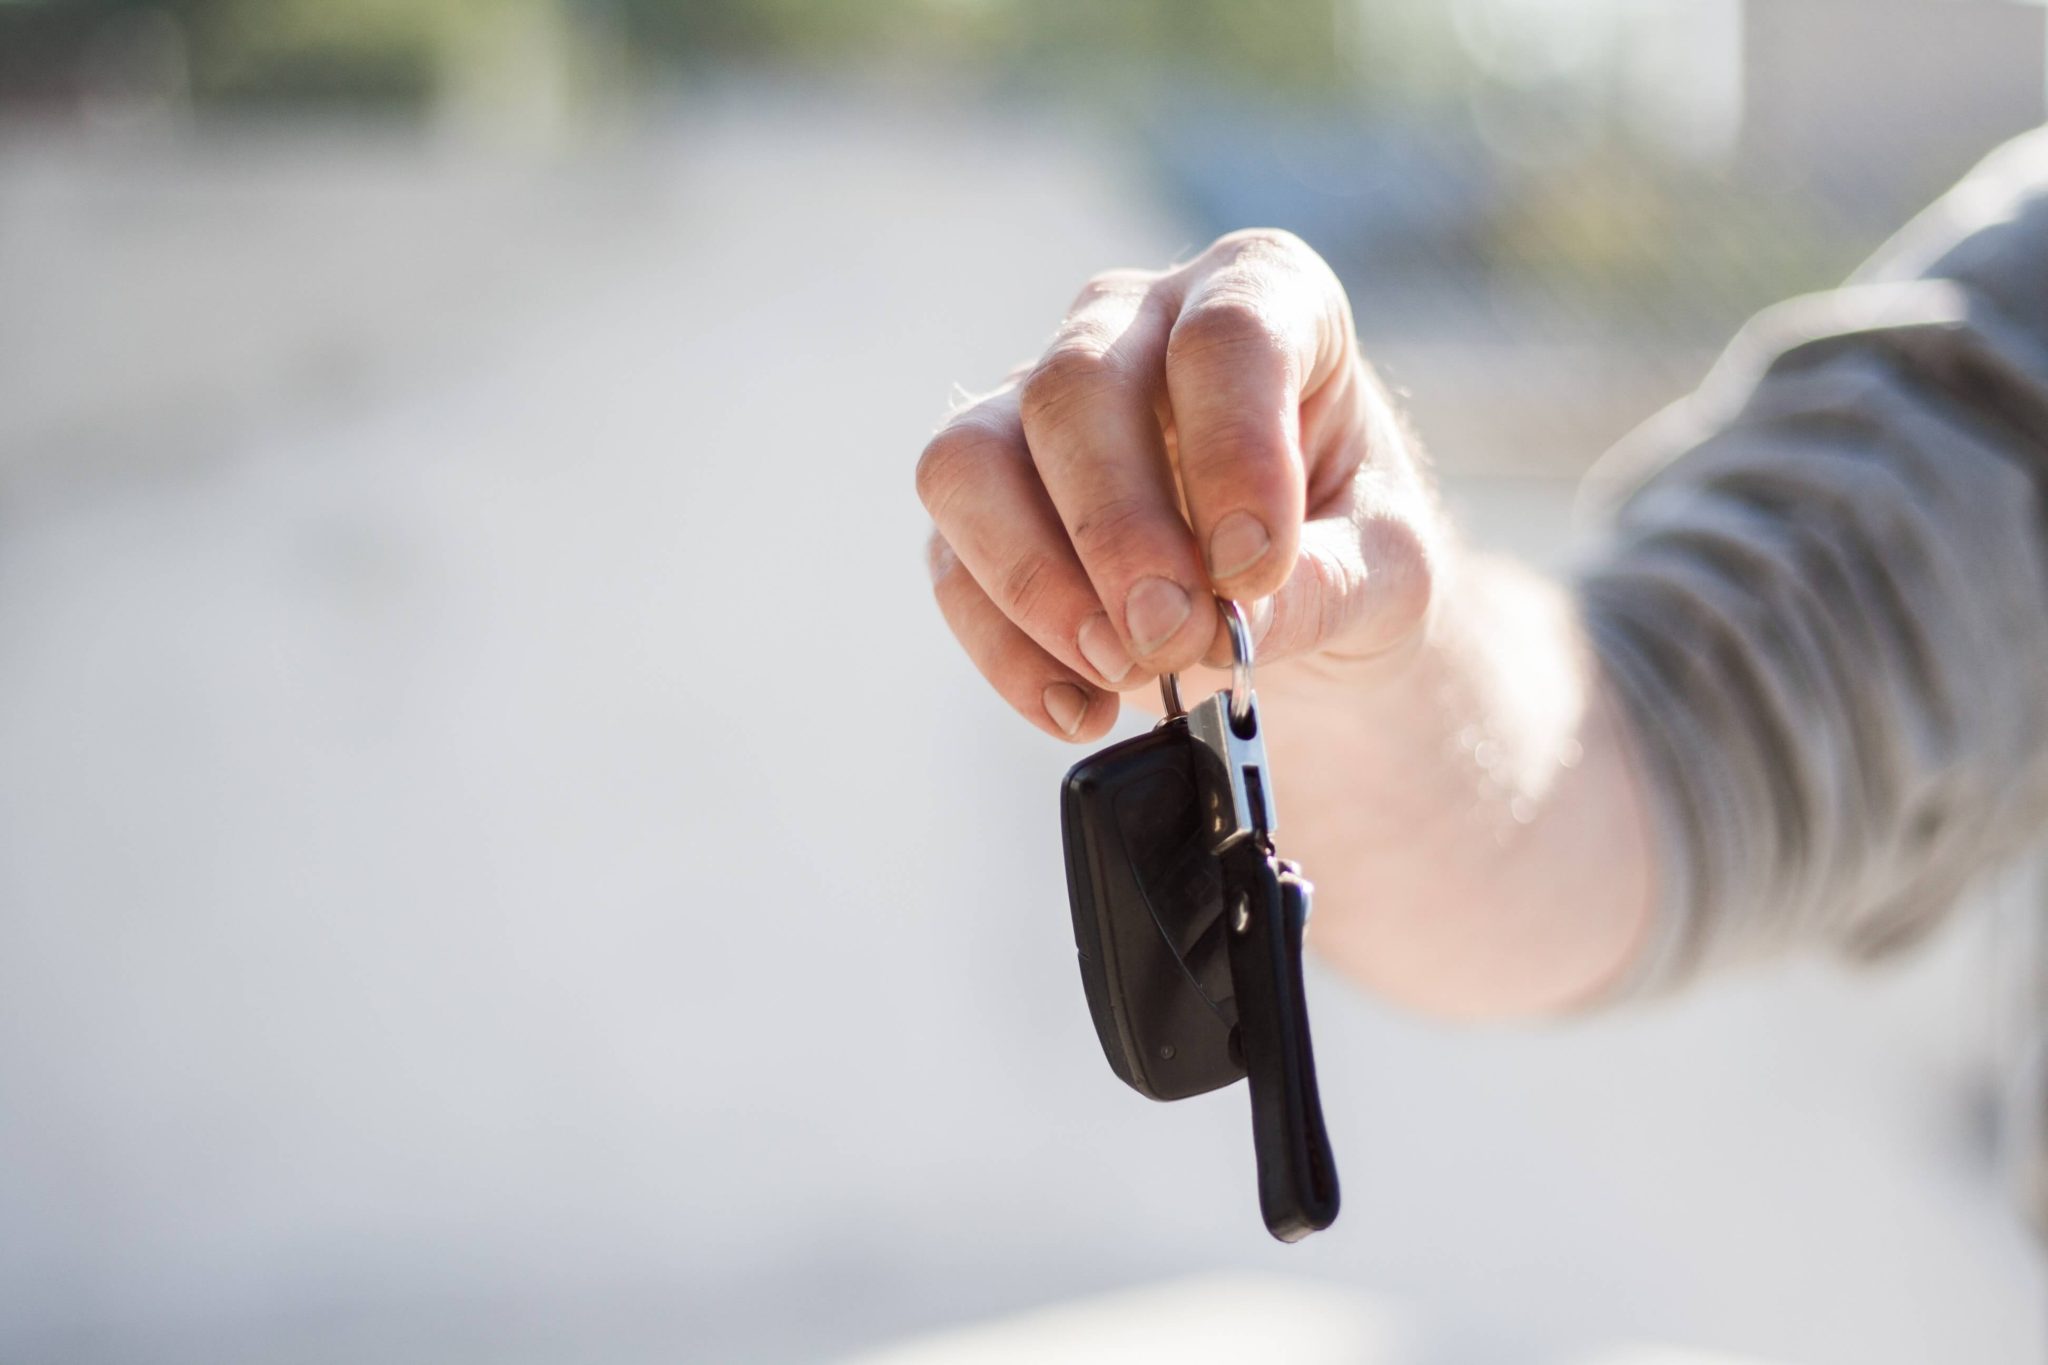 Buy vs lease a car